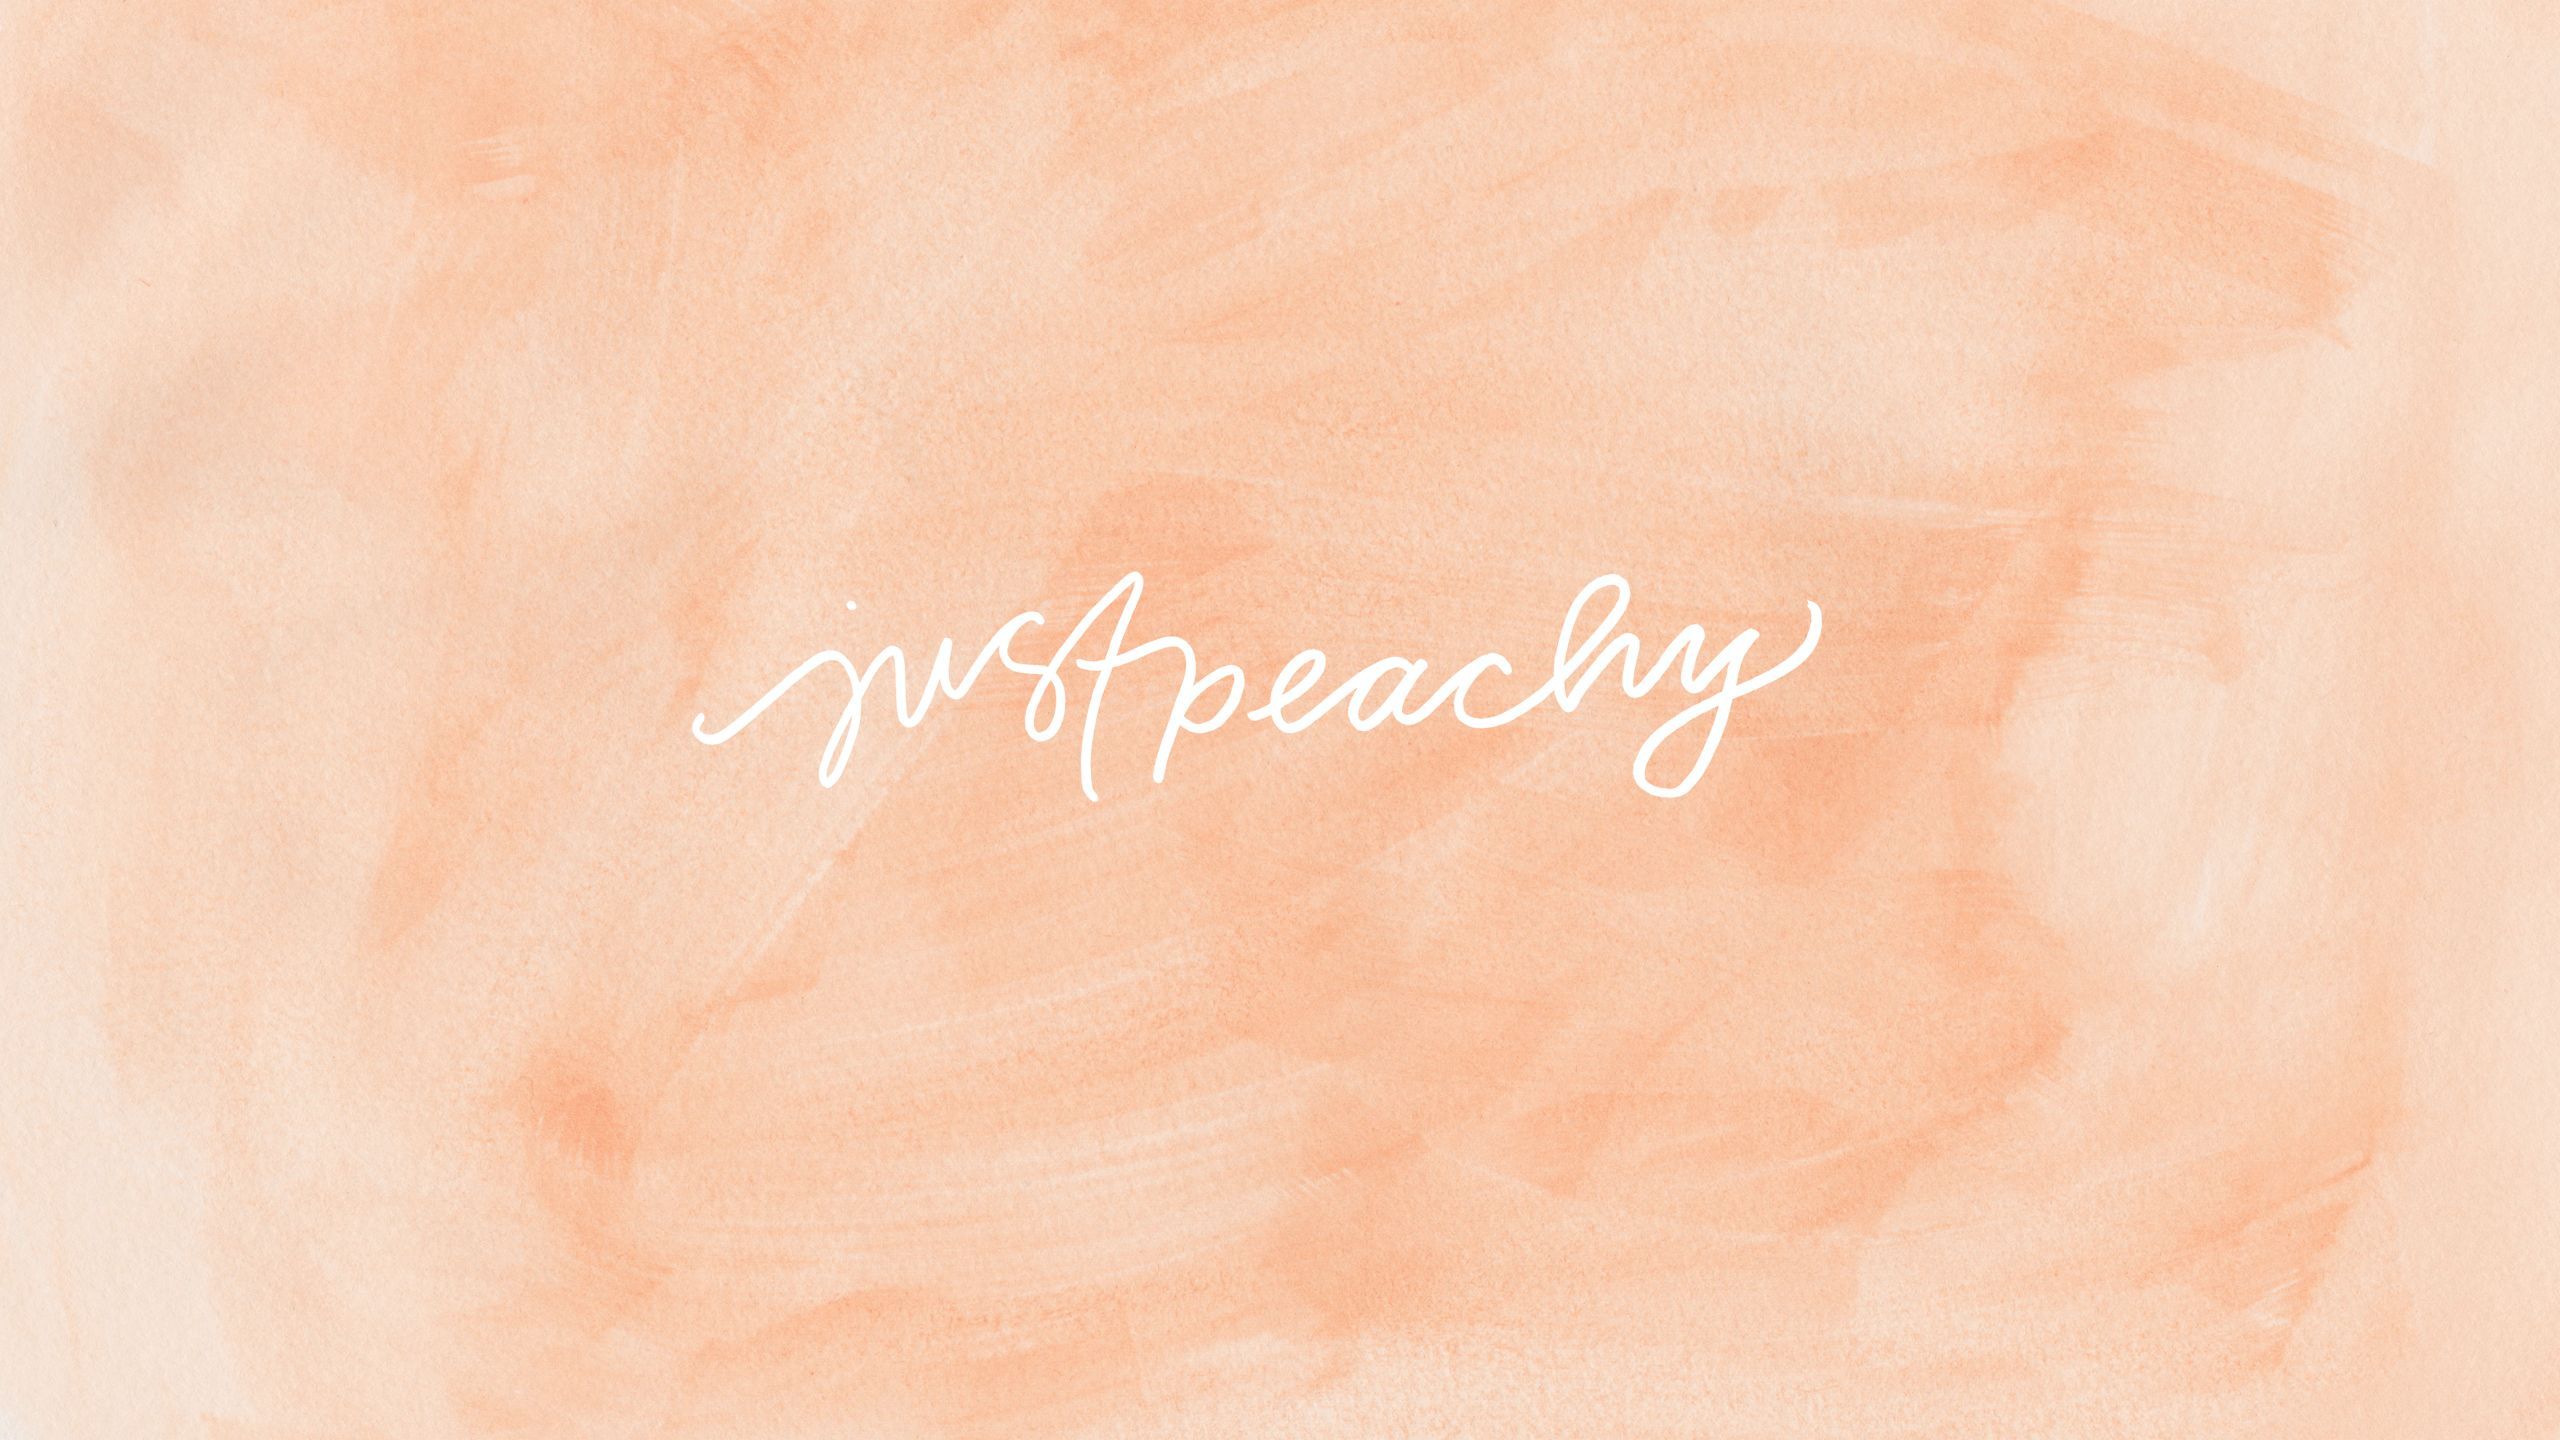 Peach Aesthetic Wallpaper High Quality. 